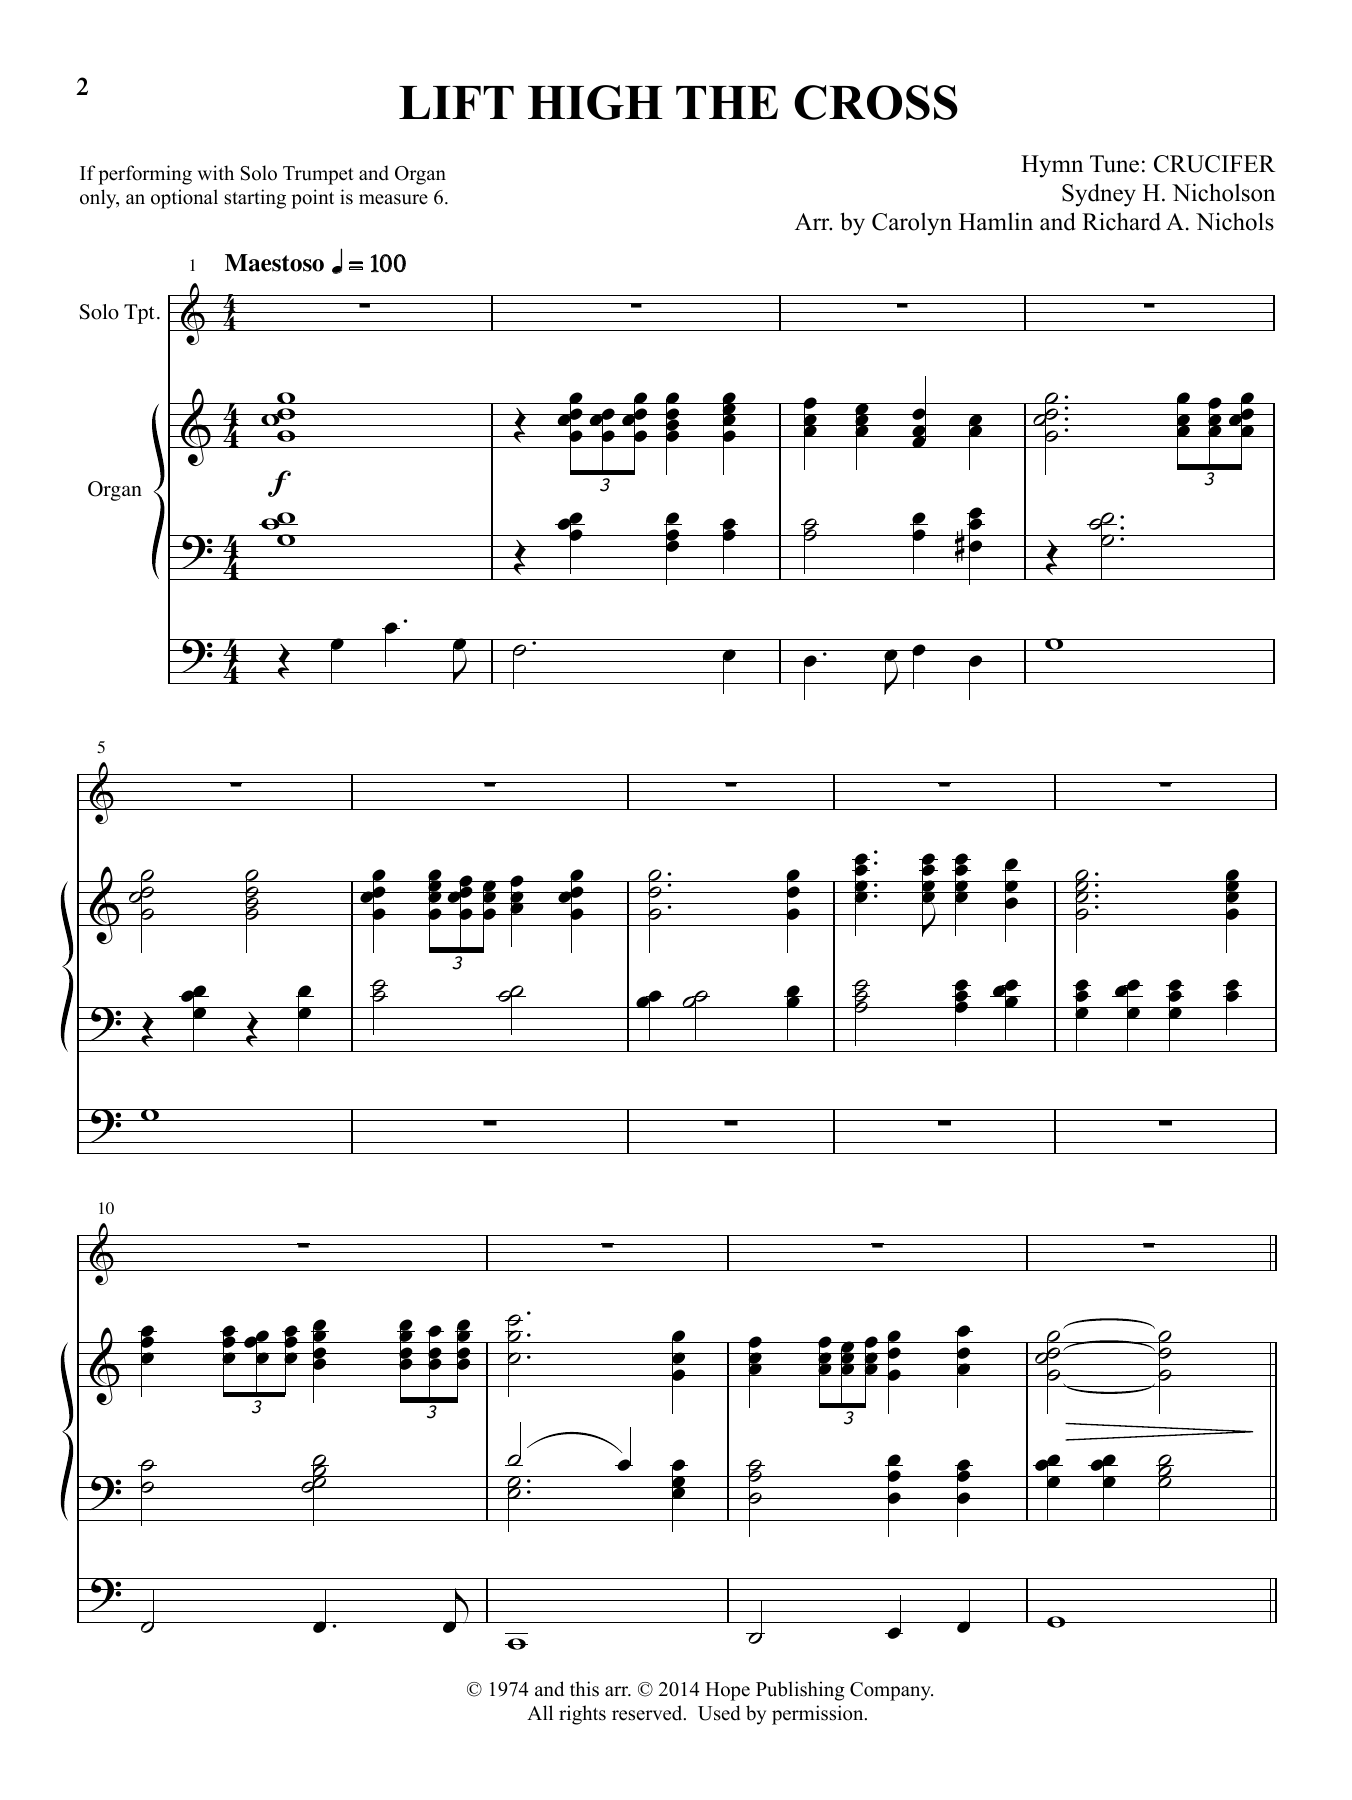 Sydney H. Nicholson Lift High the Cross (arr. Carolyn Hamlin and Richard A. Nichols) sheet music notes and chords arranged for Organ